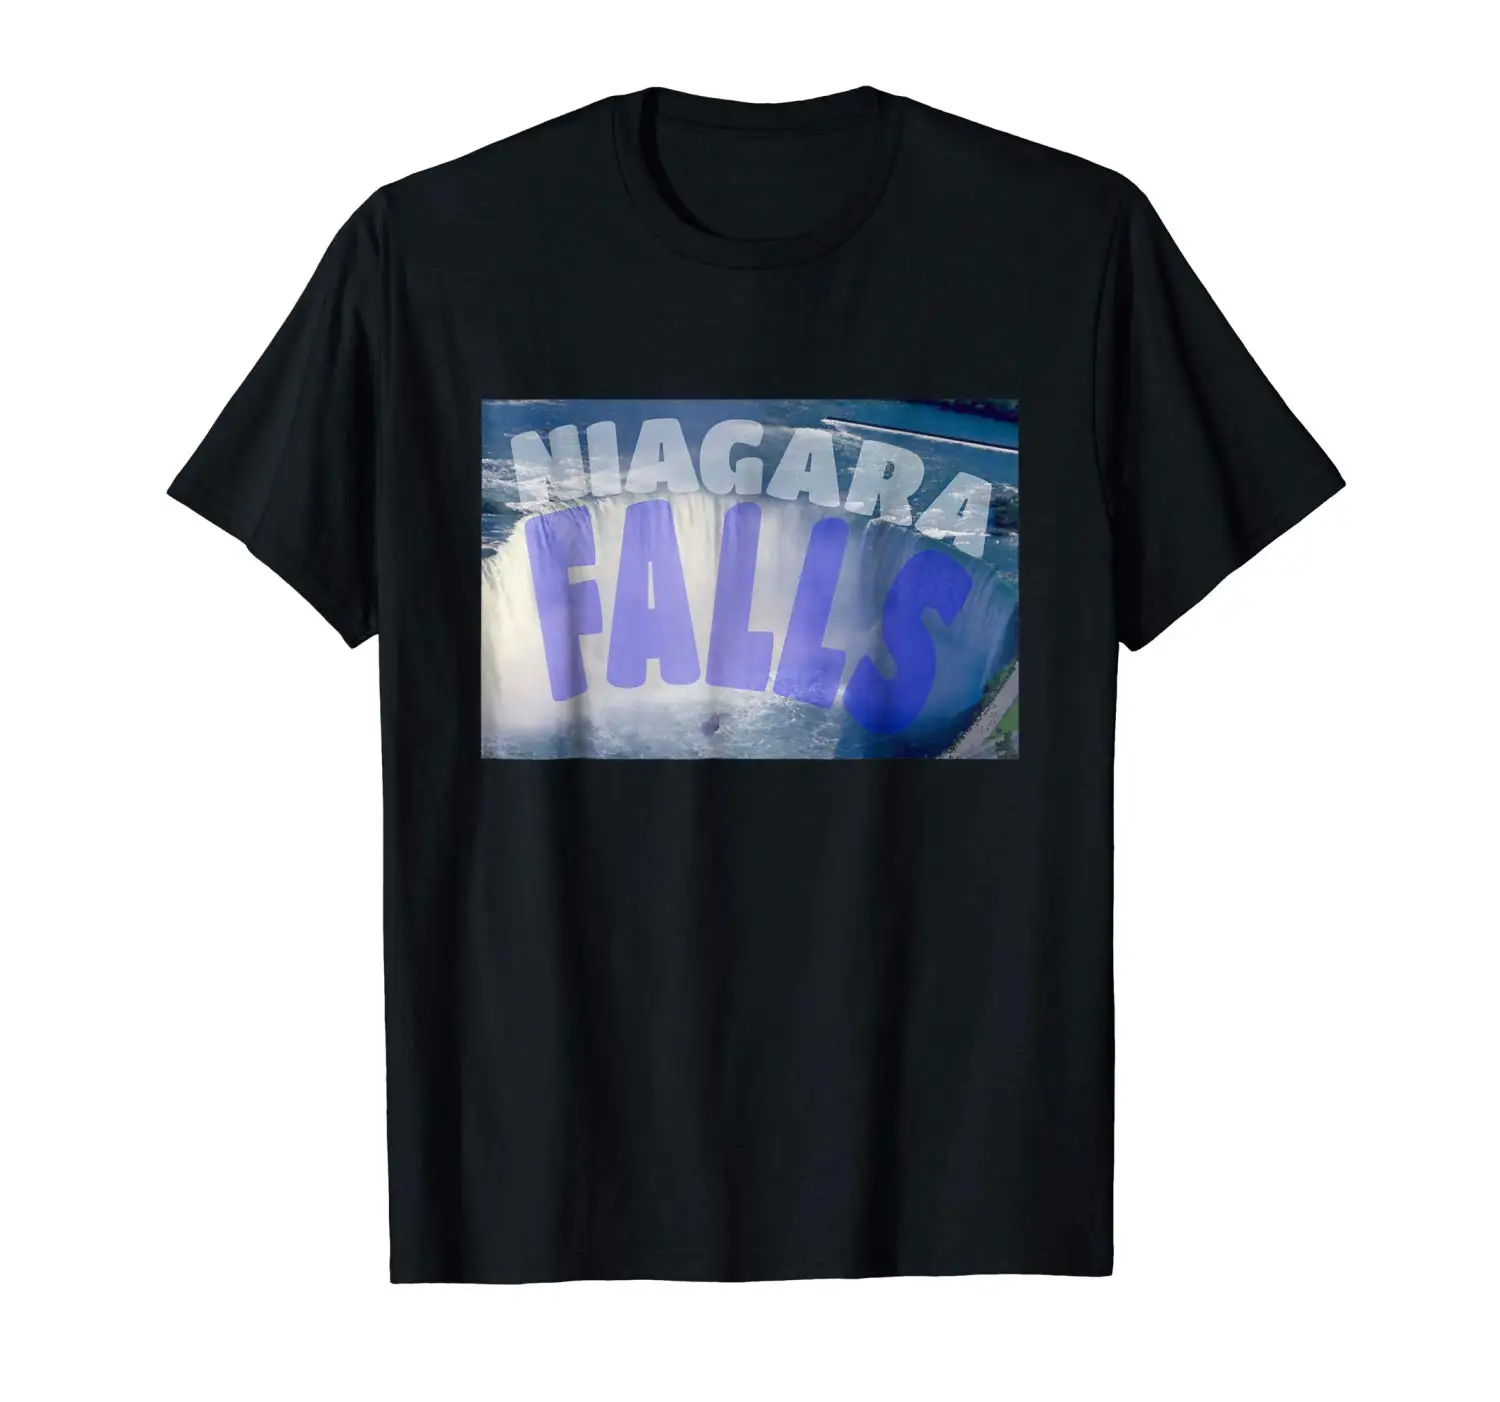 

Niagara Falls T-shirt Canada USA funny Typography Souvenir New 2018 Fashion T Shirt Men Free Shipping Summer Fashion